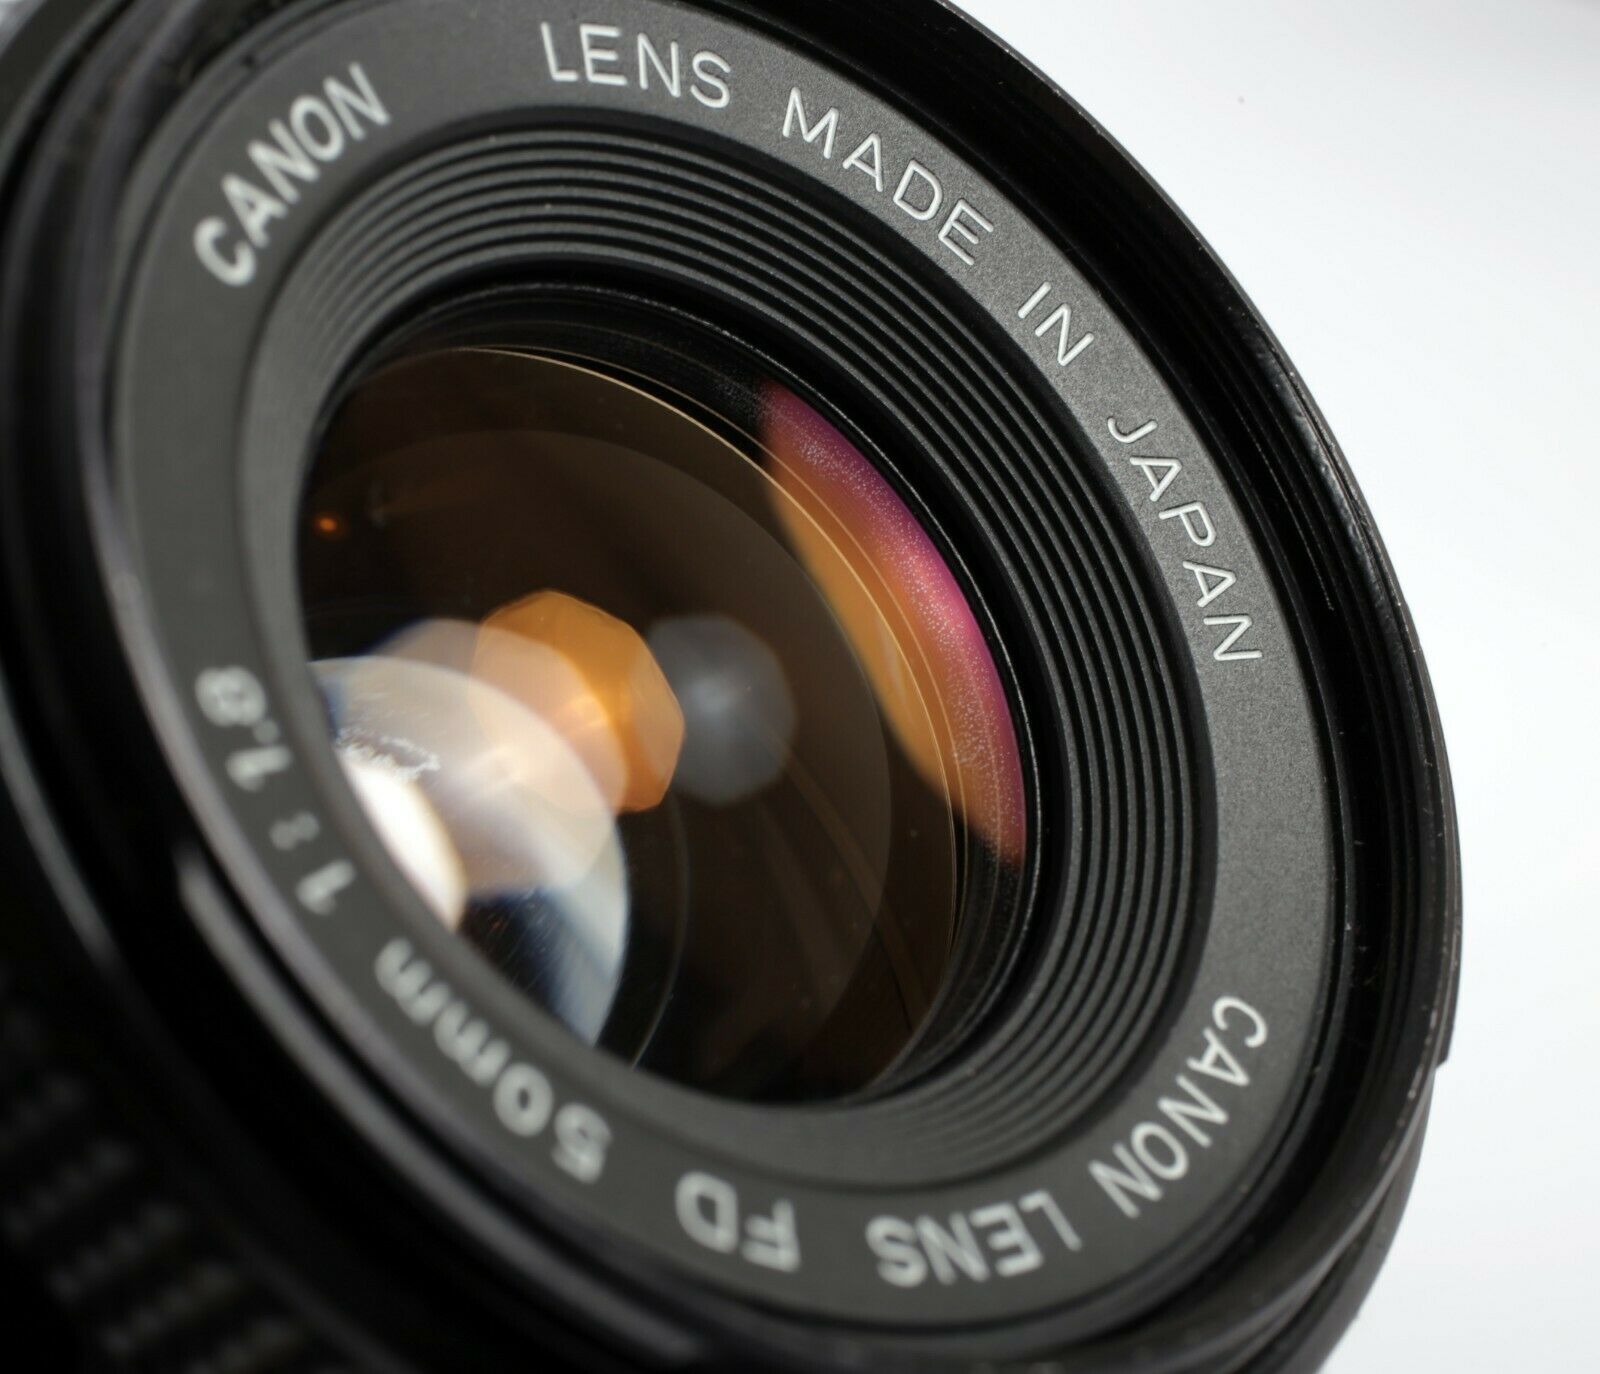 CANON AE-1 Program 35mm SLR Film Camera with FDn 50mm F1.8 Lens 